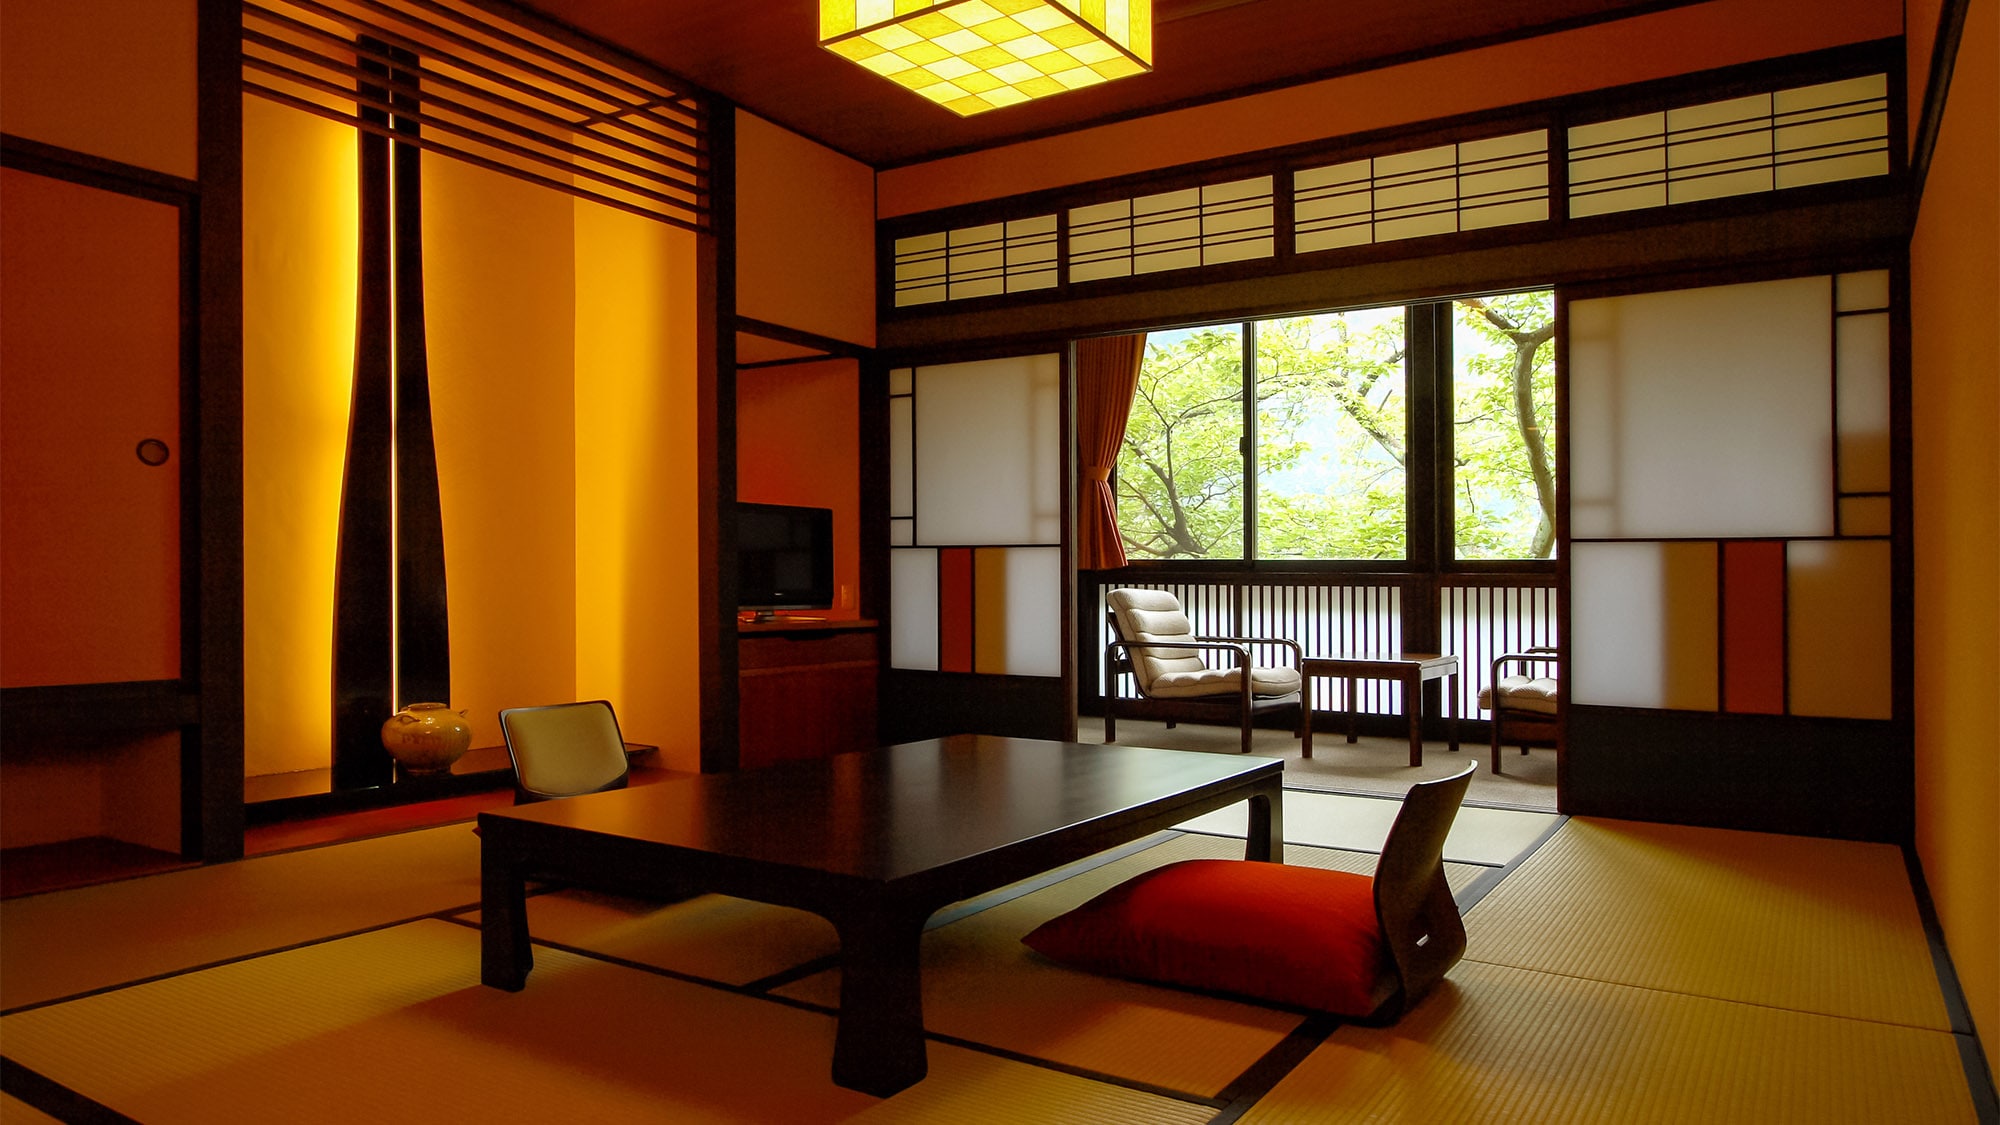 ・Modern Japanese room from 10 tatami mats